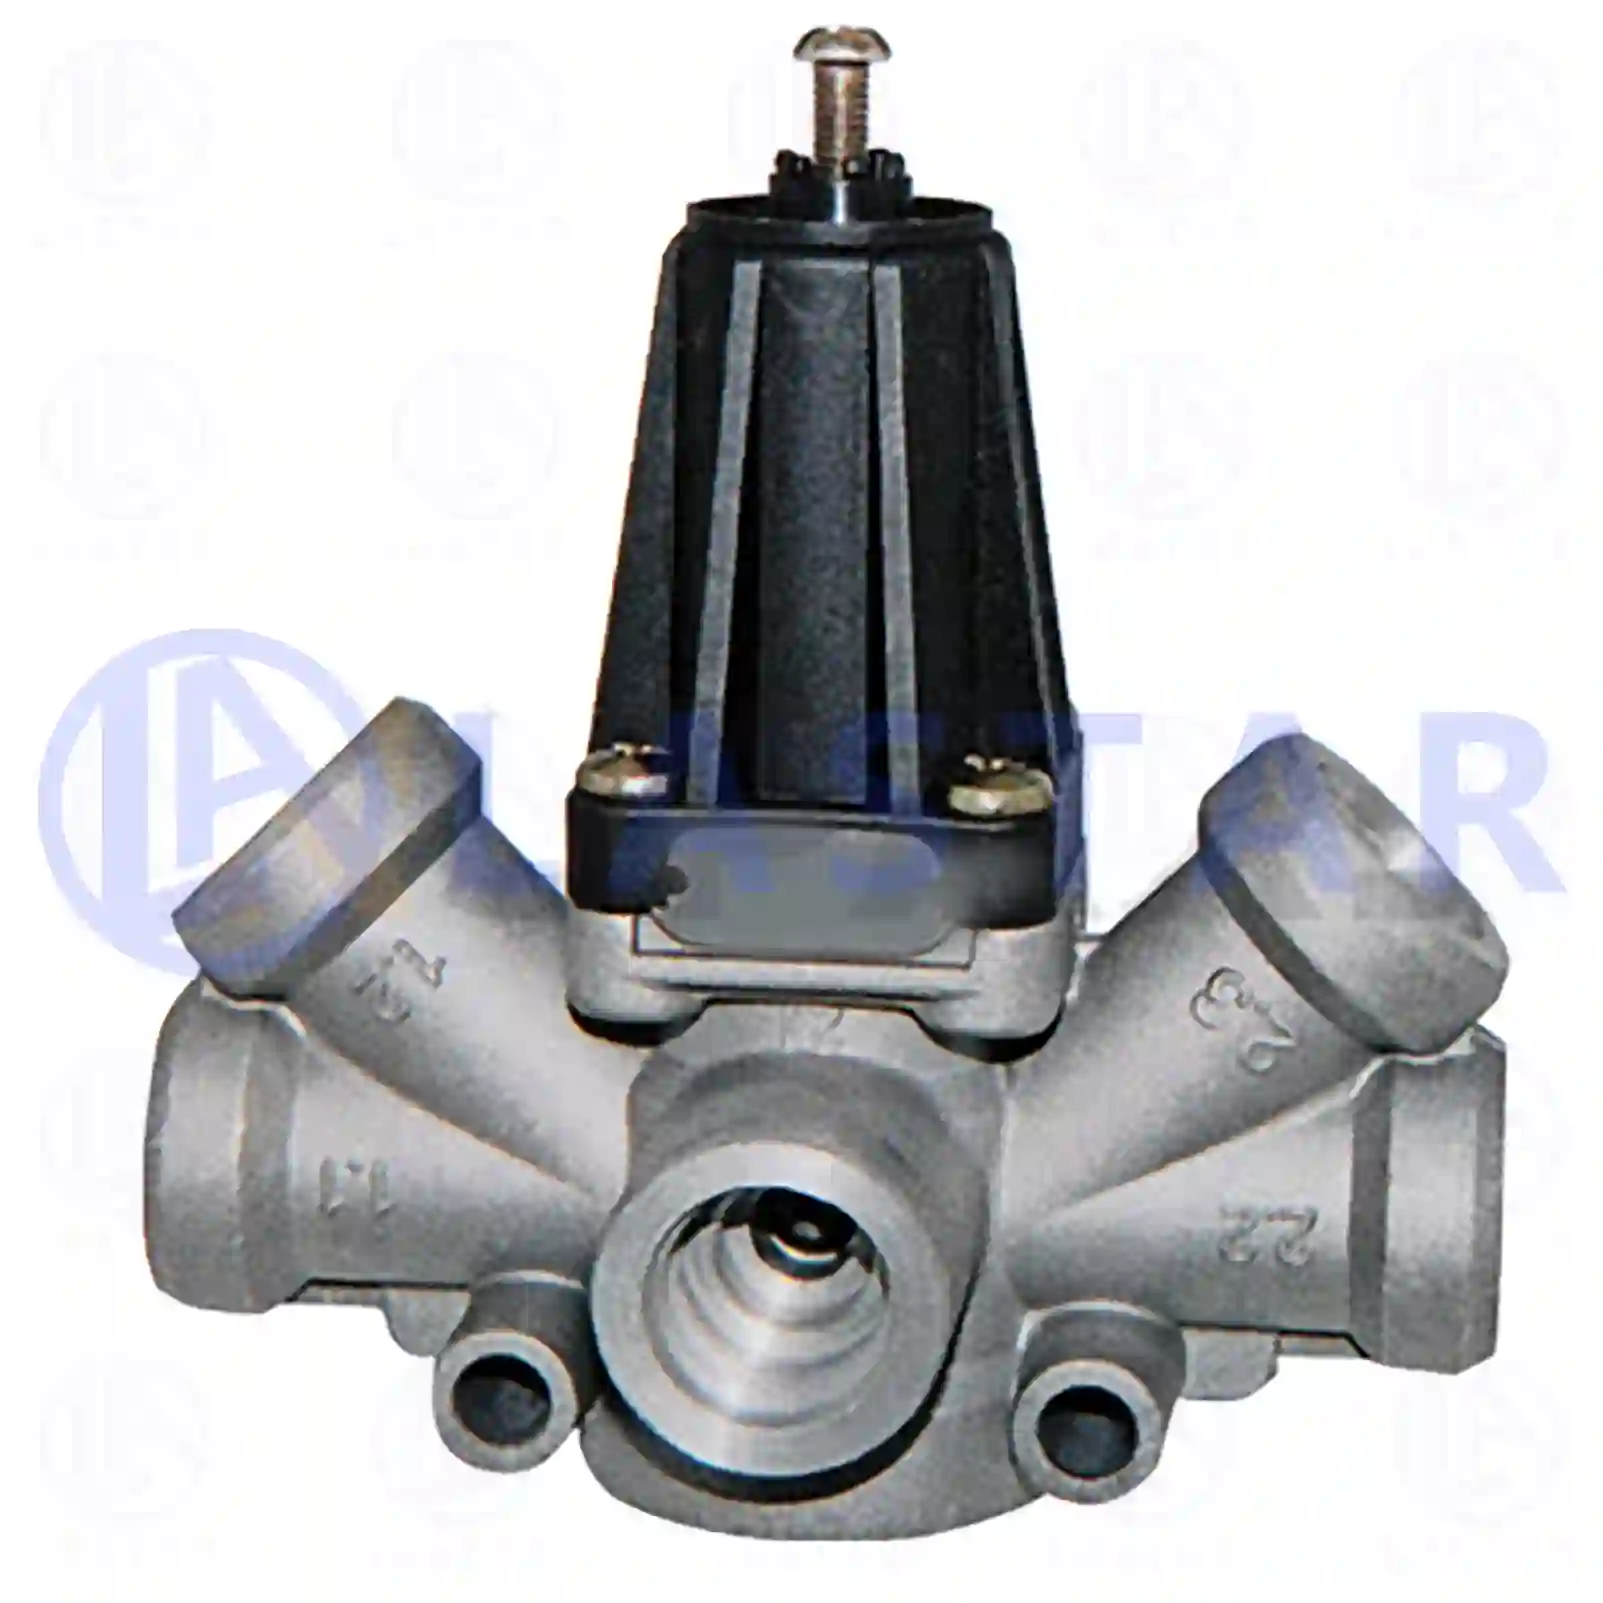 Pressure limiting valve, 77716345, 1305138, 1935020, ZG50572-0008, ||  77716345 Lastar Spare Part | Truck Spare Parts, Auotomotive Spare Parts Pressure limiting valve, 77716345, 1305138, 1935020, ZG50572-0008, ||  77716345 Lastar Spare Part | Truck Spare Parts, Auotomotive Spare Parts